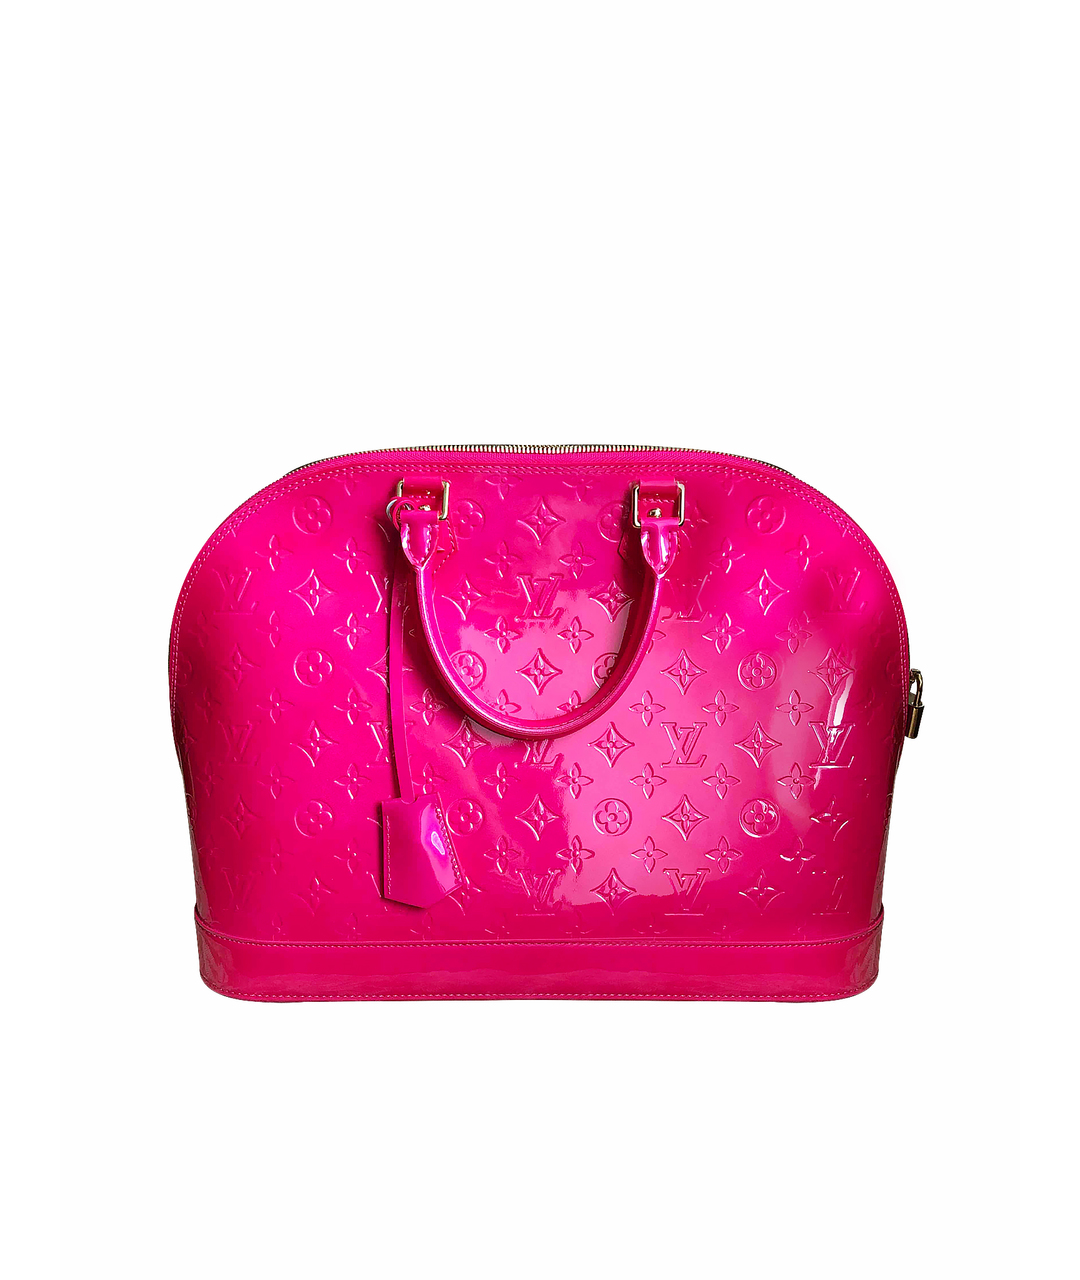 LOUIS VUITTON PRE-OWNED Розовая сумка с короткими ручками из лакированной кожи, фото 1